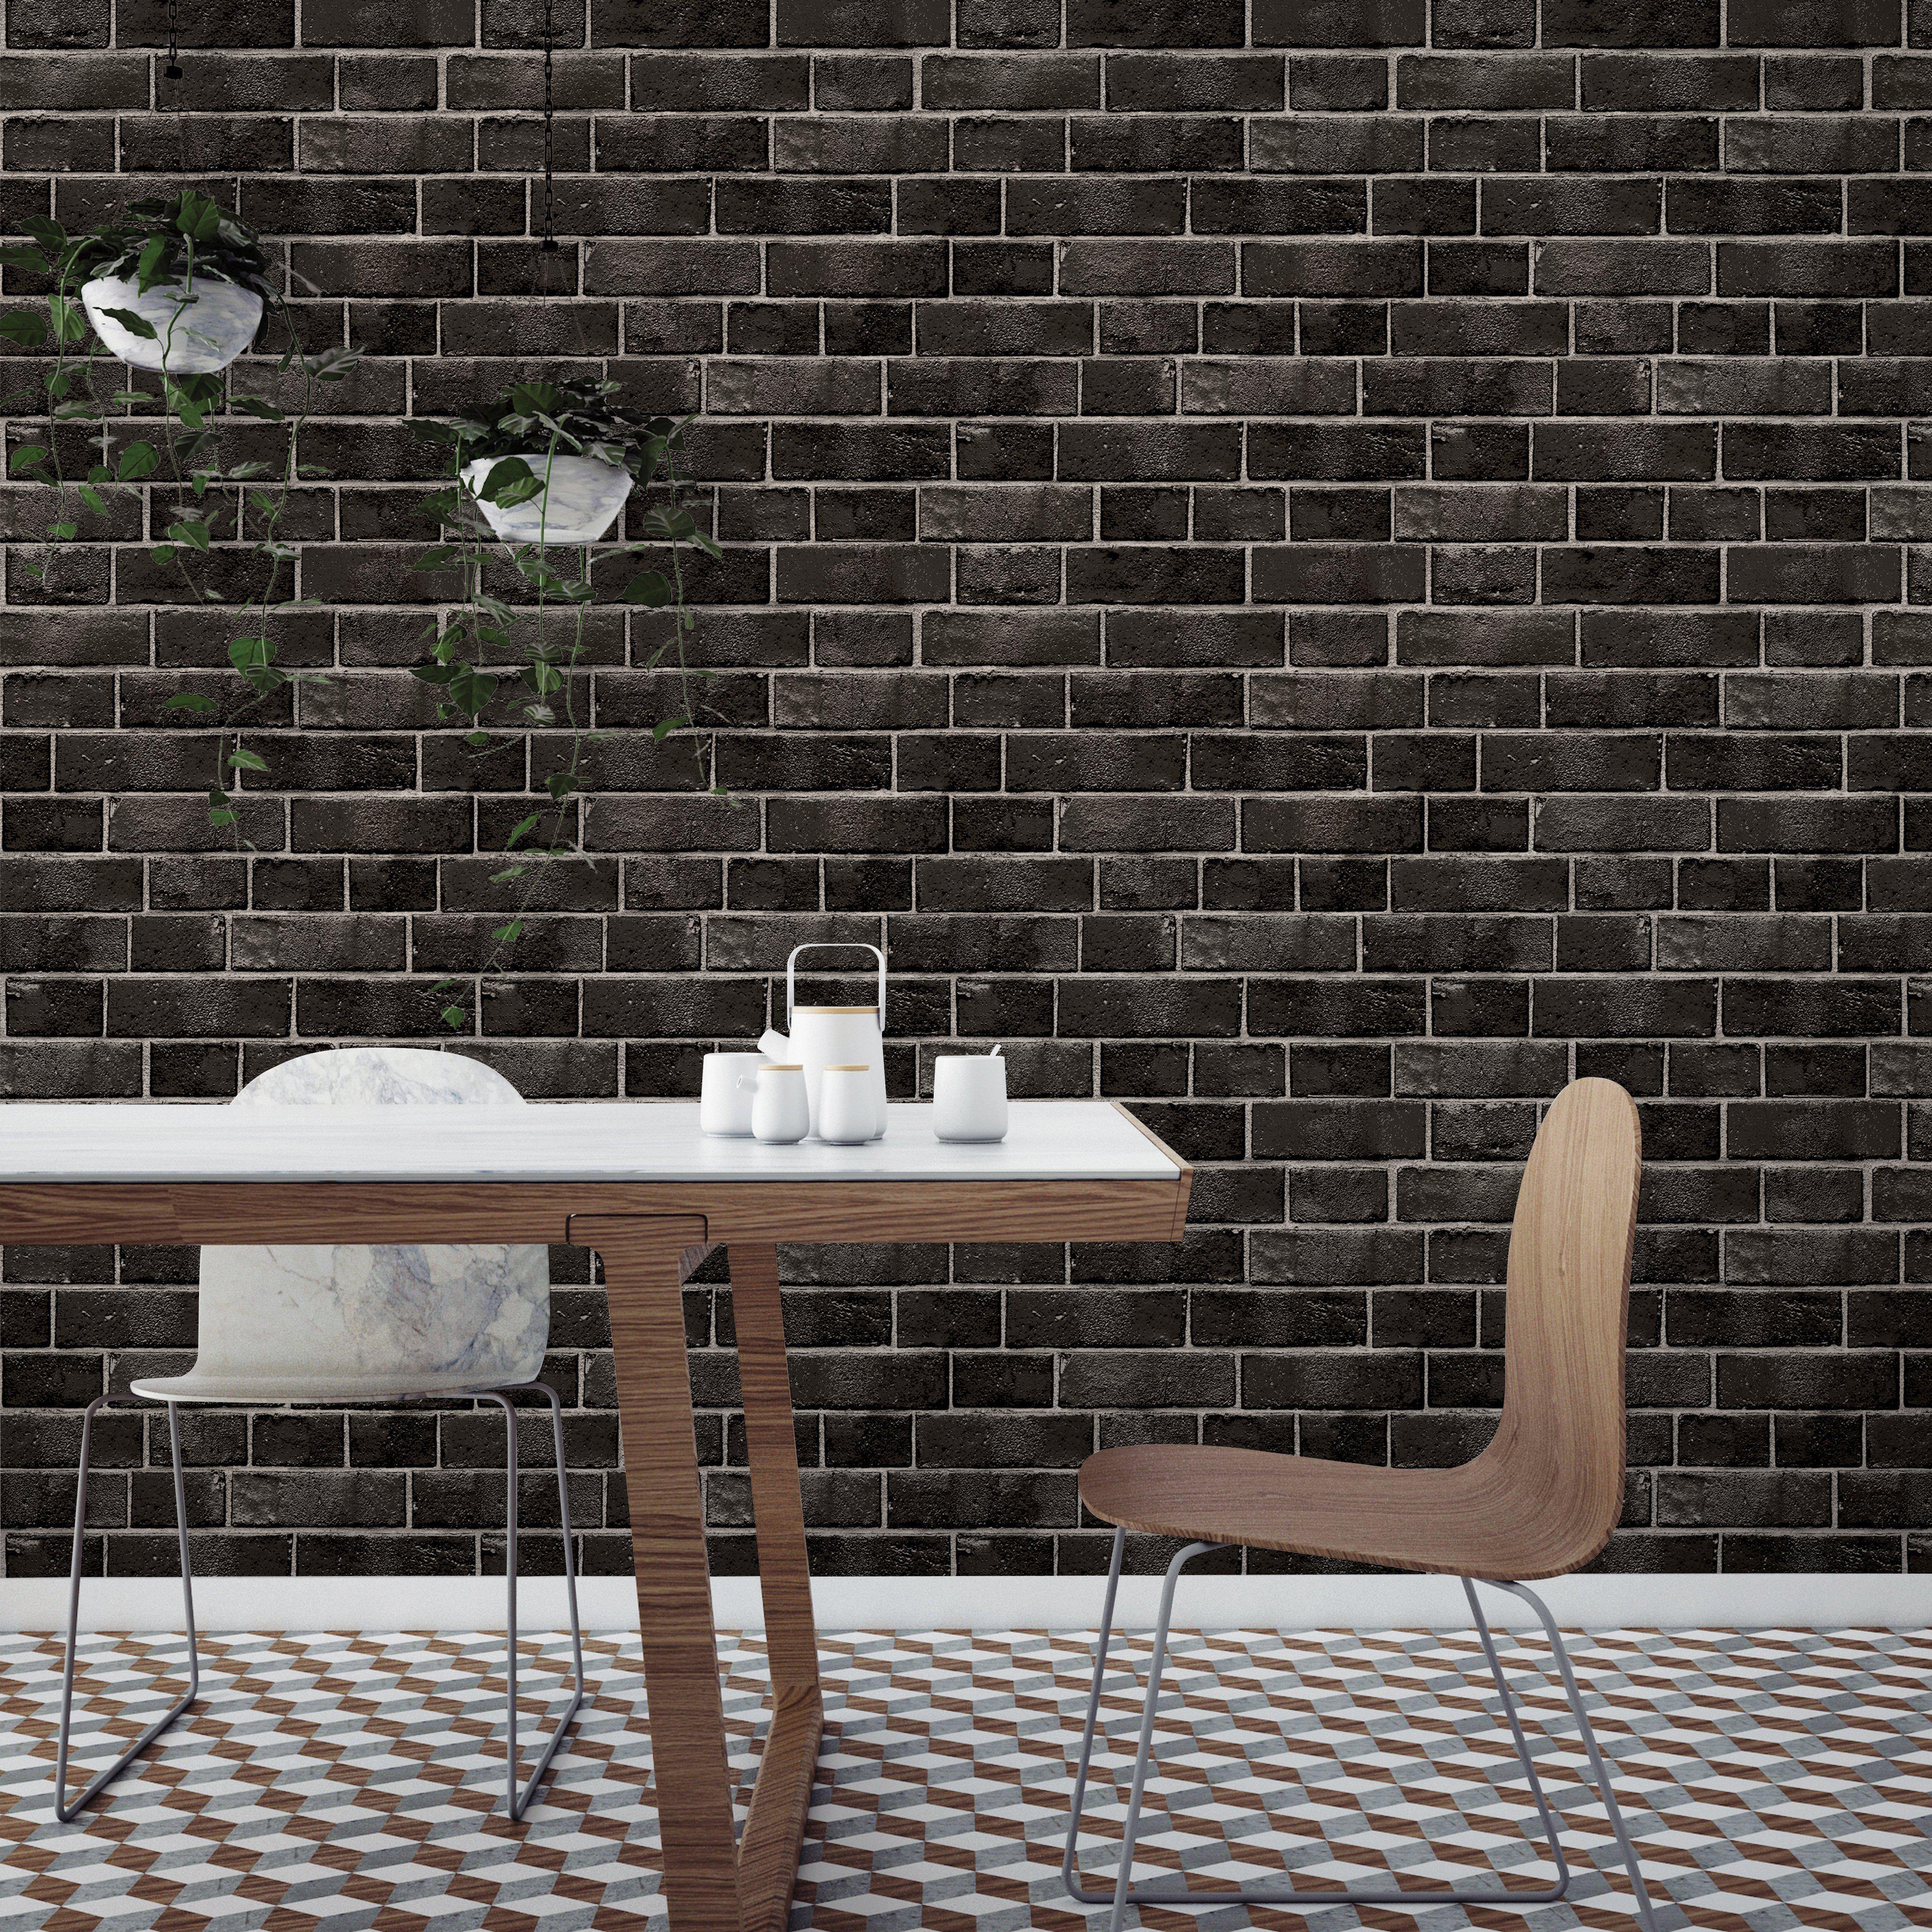 Tempaper Designs LIFESTYLE - Brick Ebony Peel and Stick Wallpaper